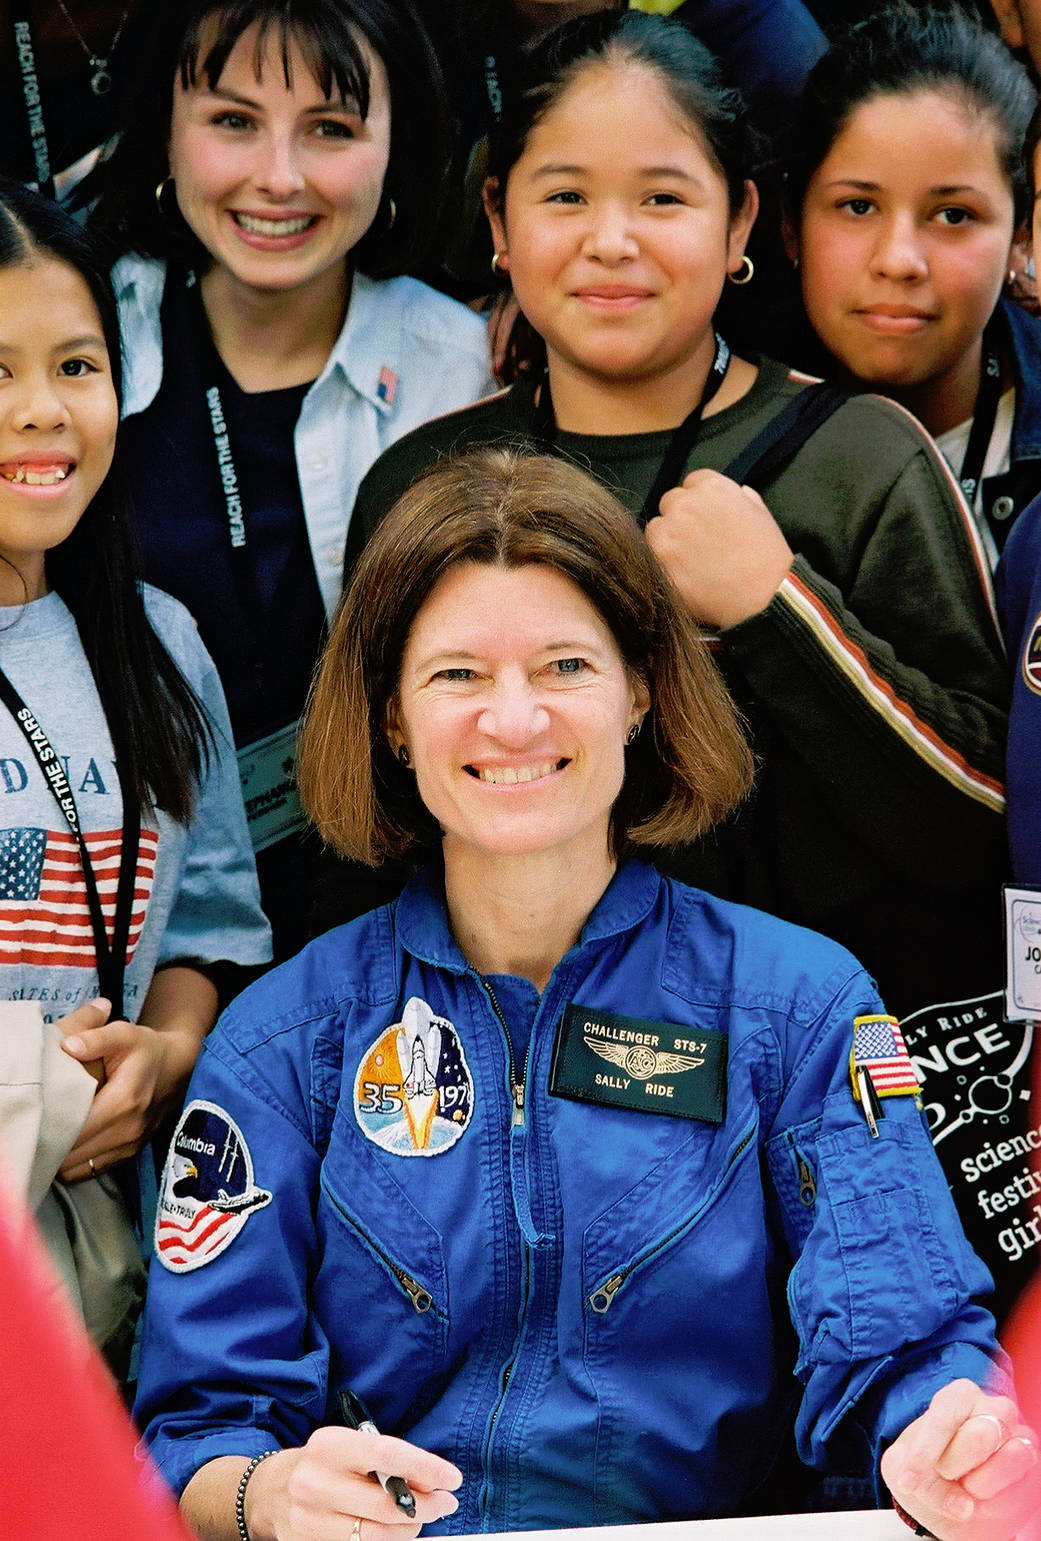 Sally Ride, Astronaut and Educator